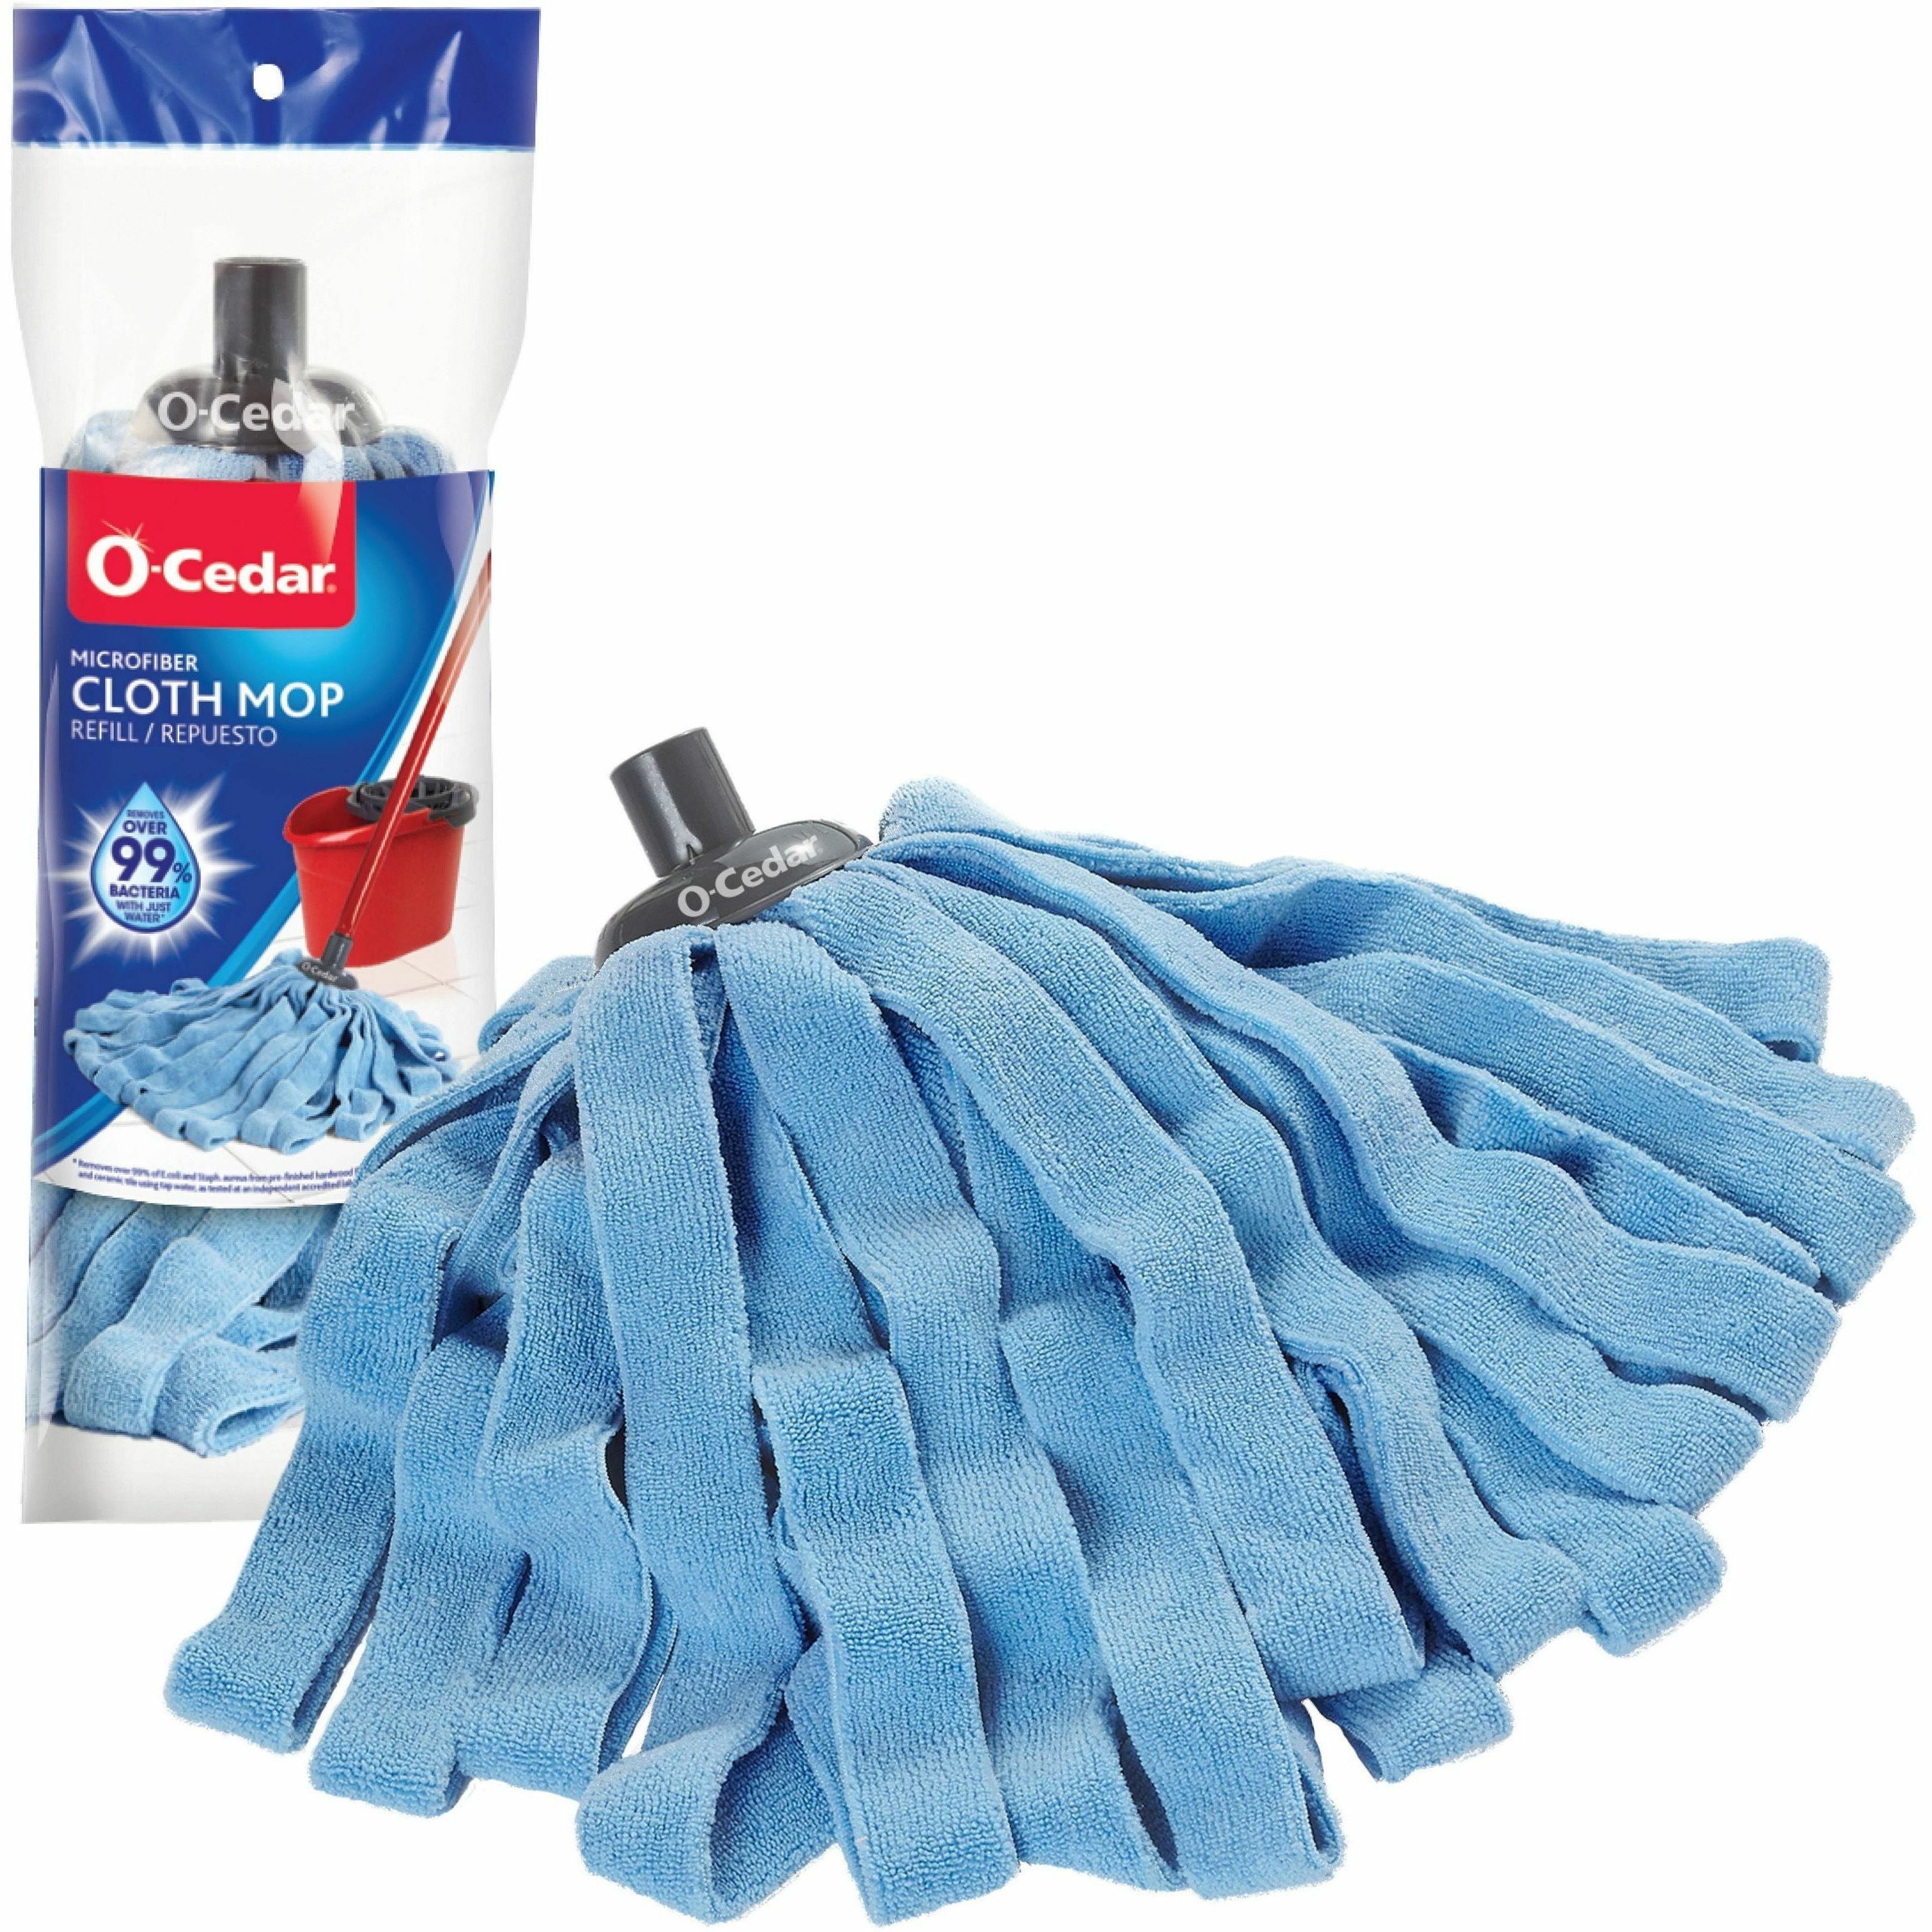 o-cedar-microfiber-cloth-mop-refill-microfiber-blue-1each_fhp149334 - 1